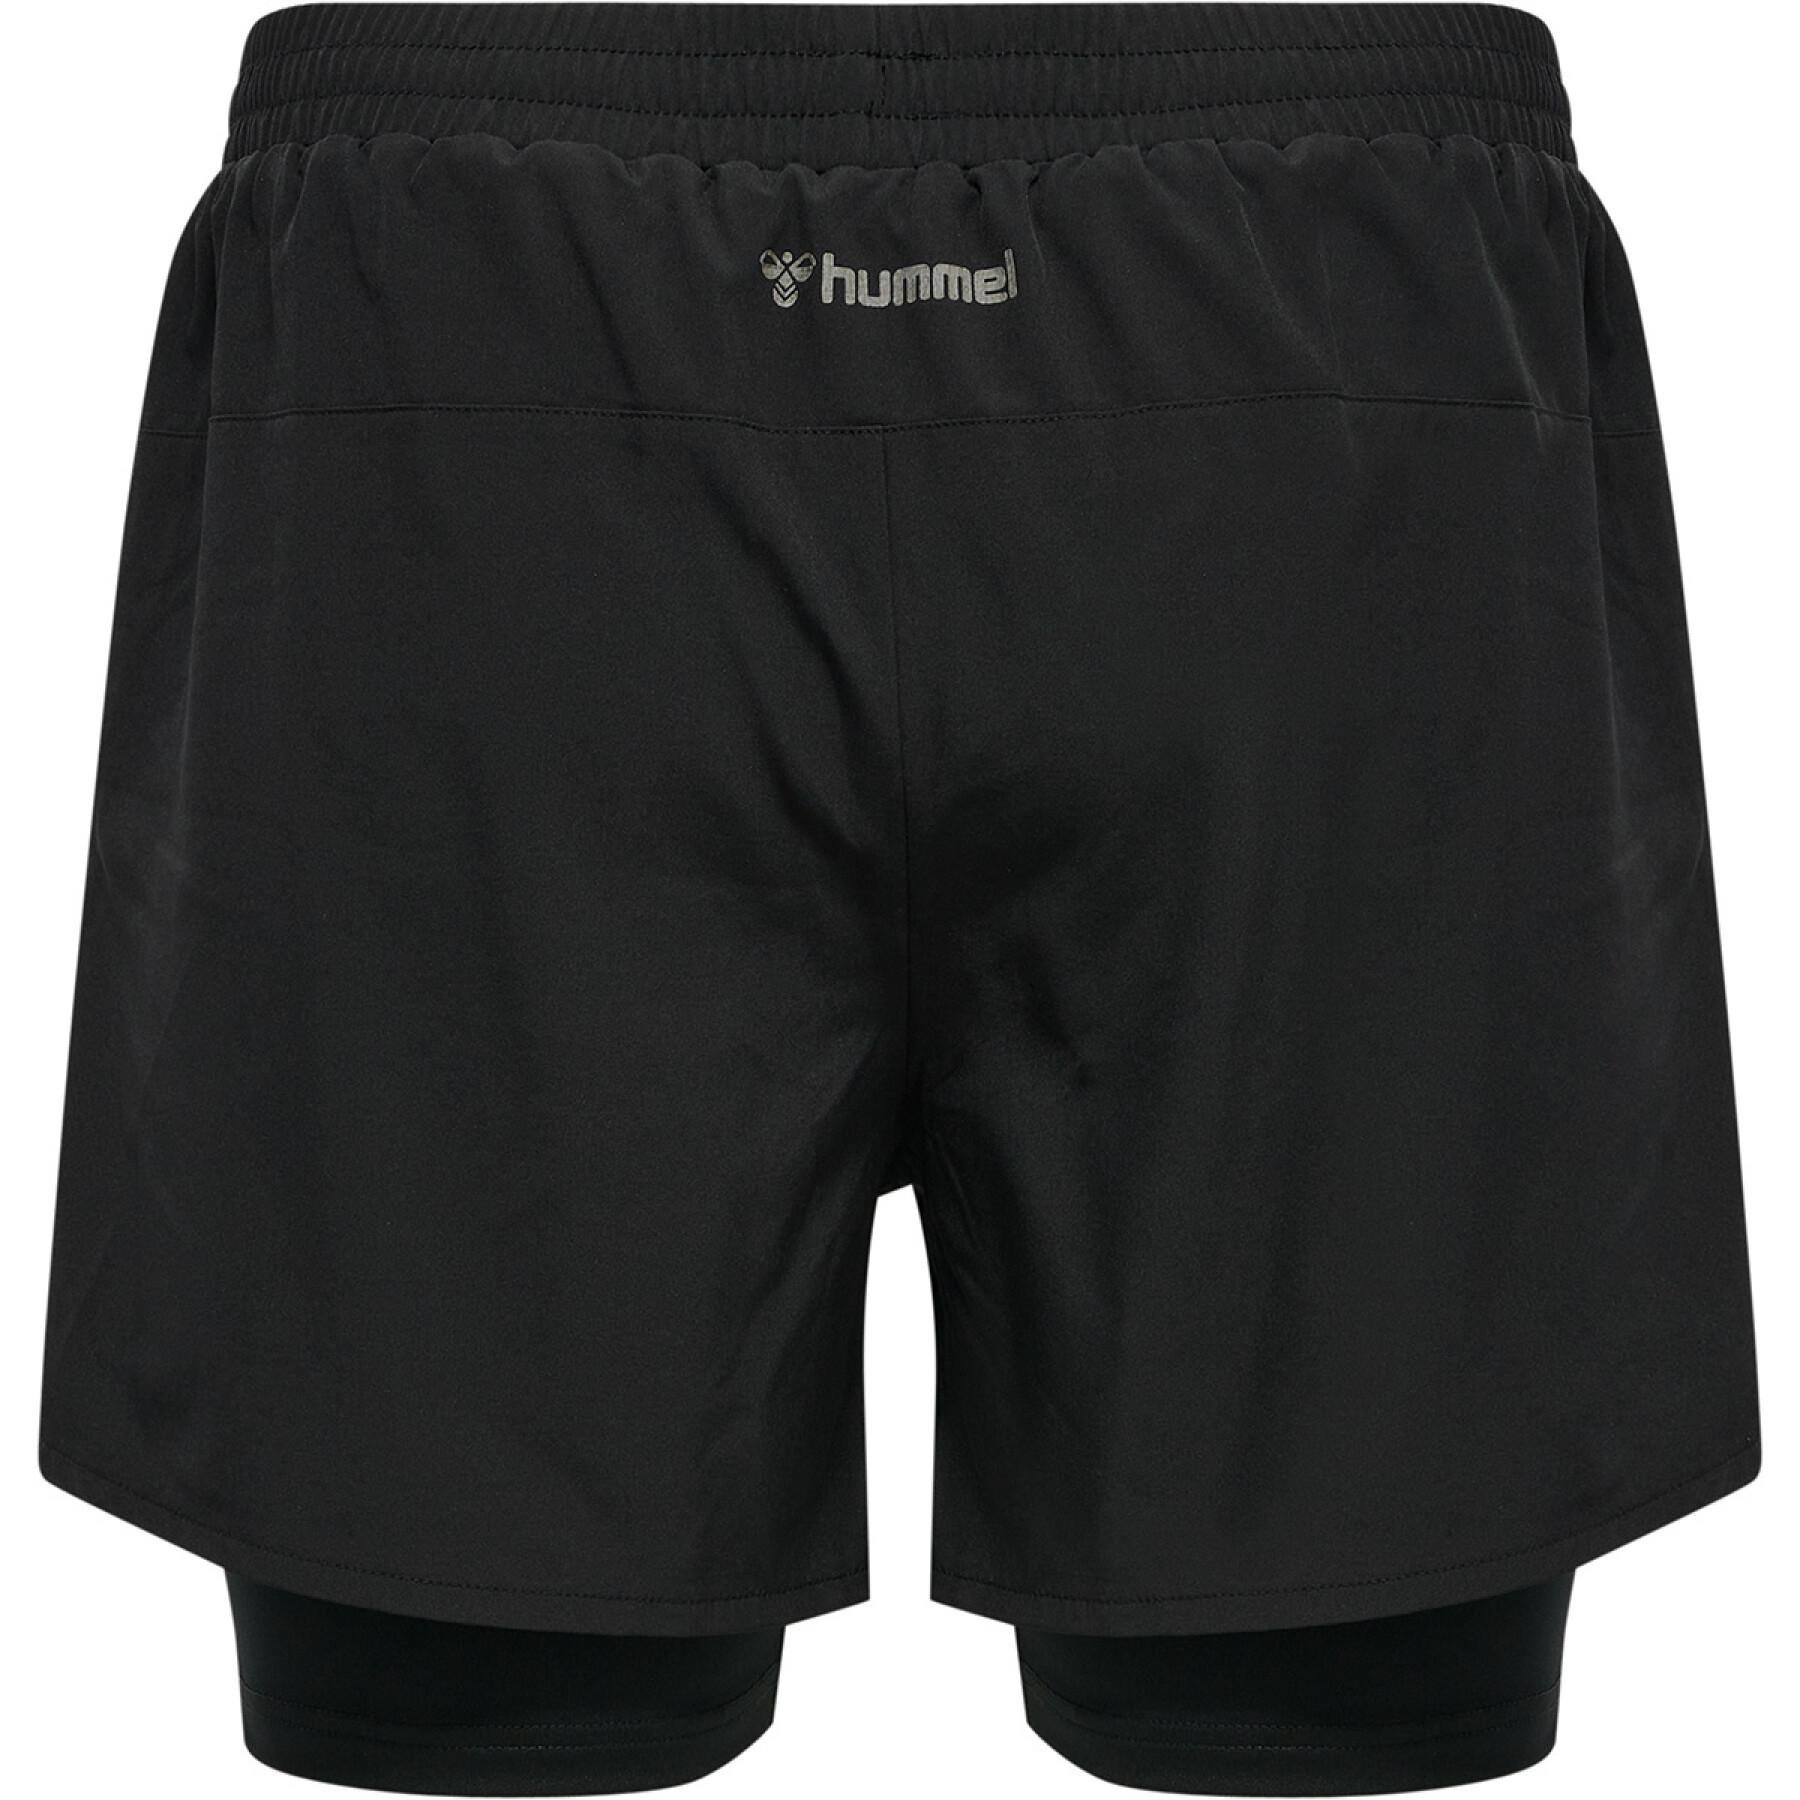 Lined shorts Hummel hmlcolton